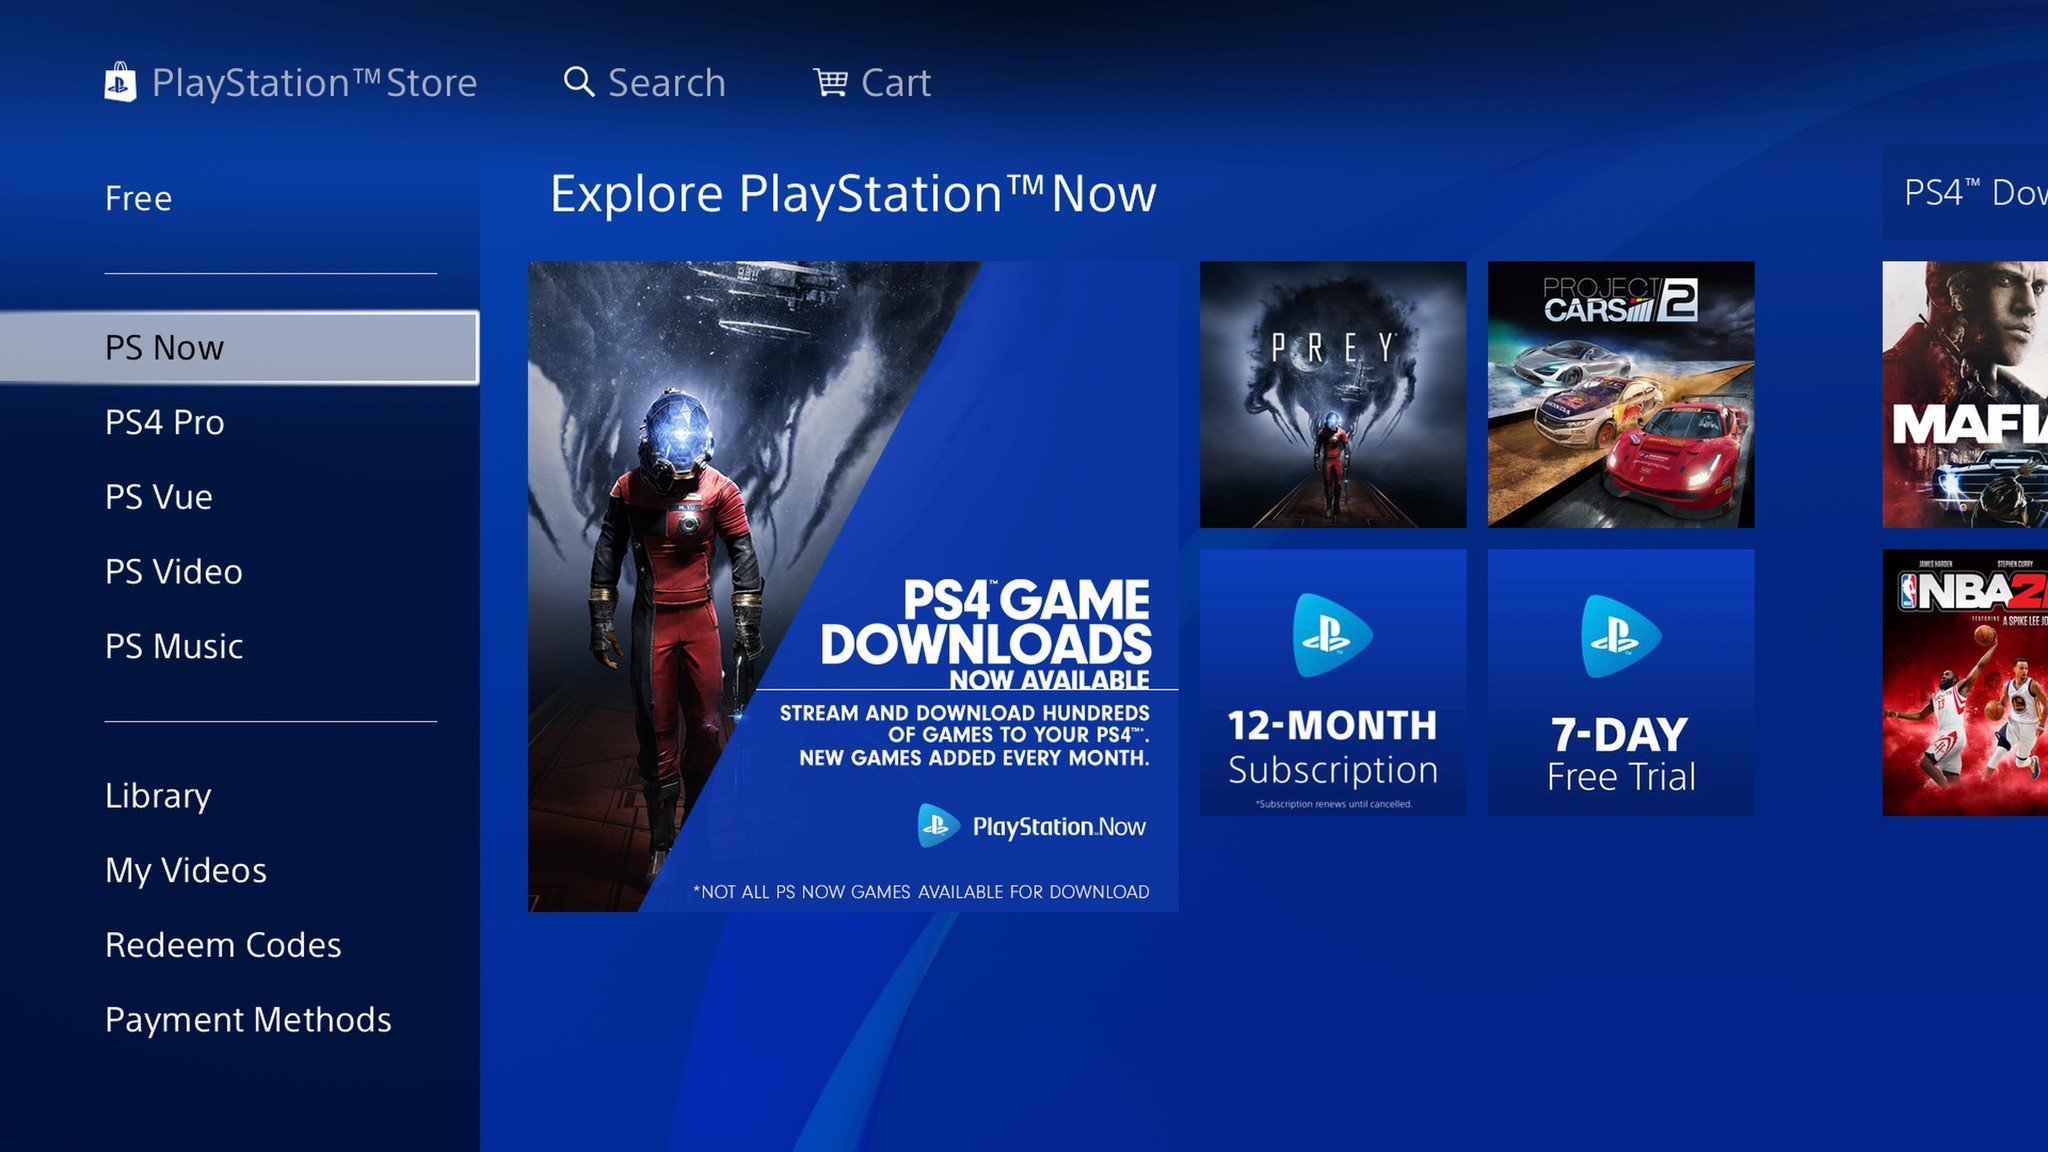 PlayStation Portal Price, Release Date Window,…